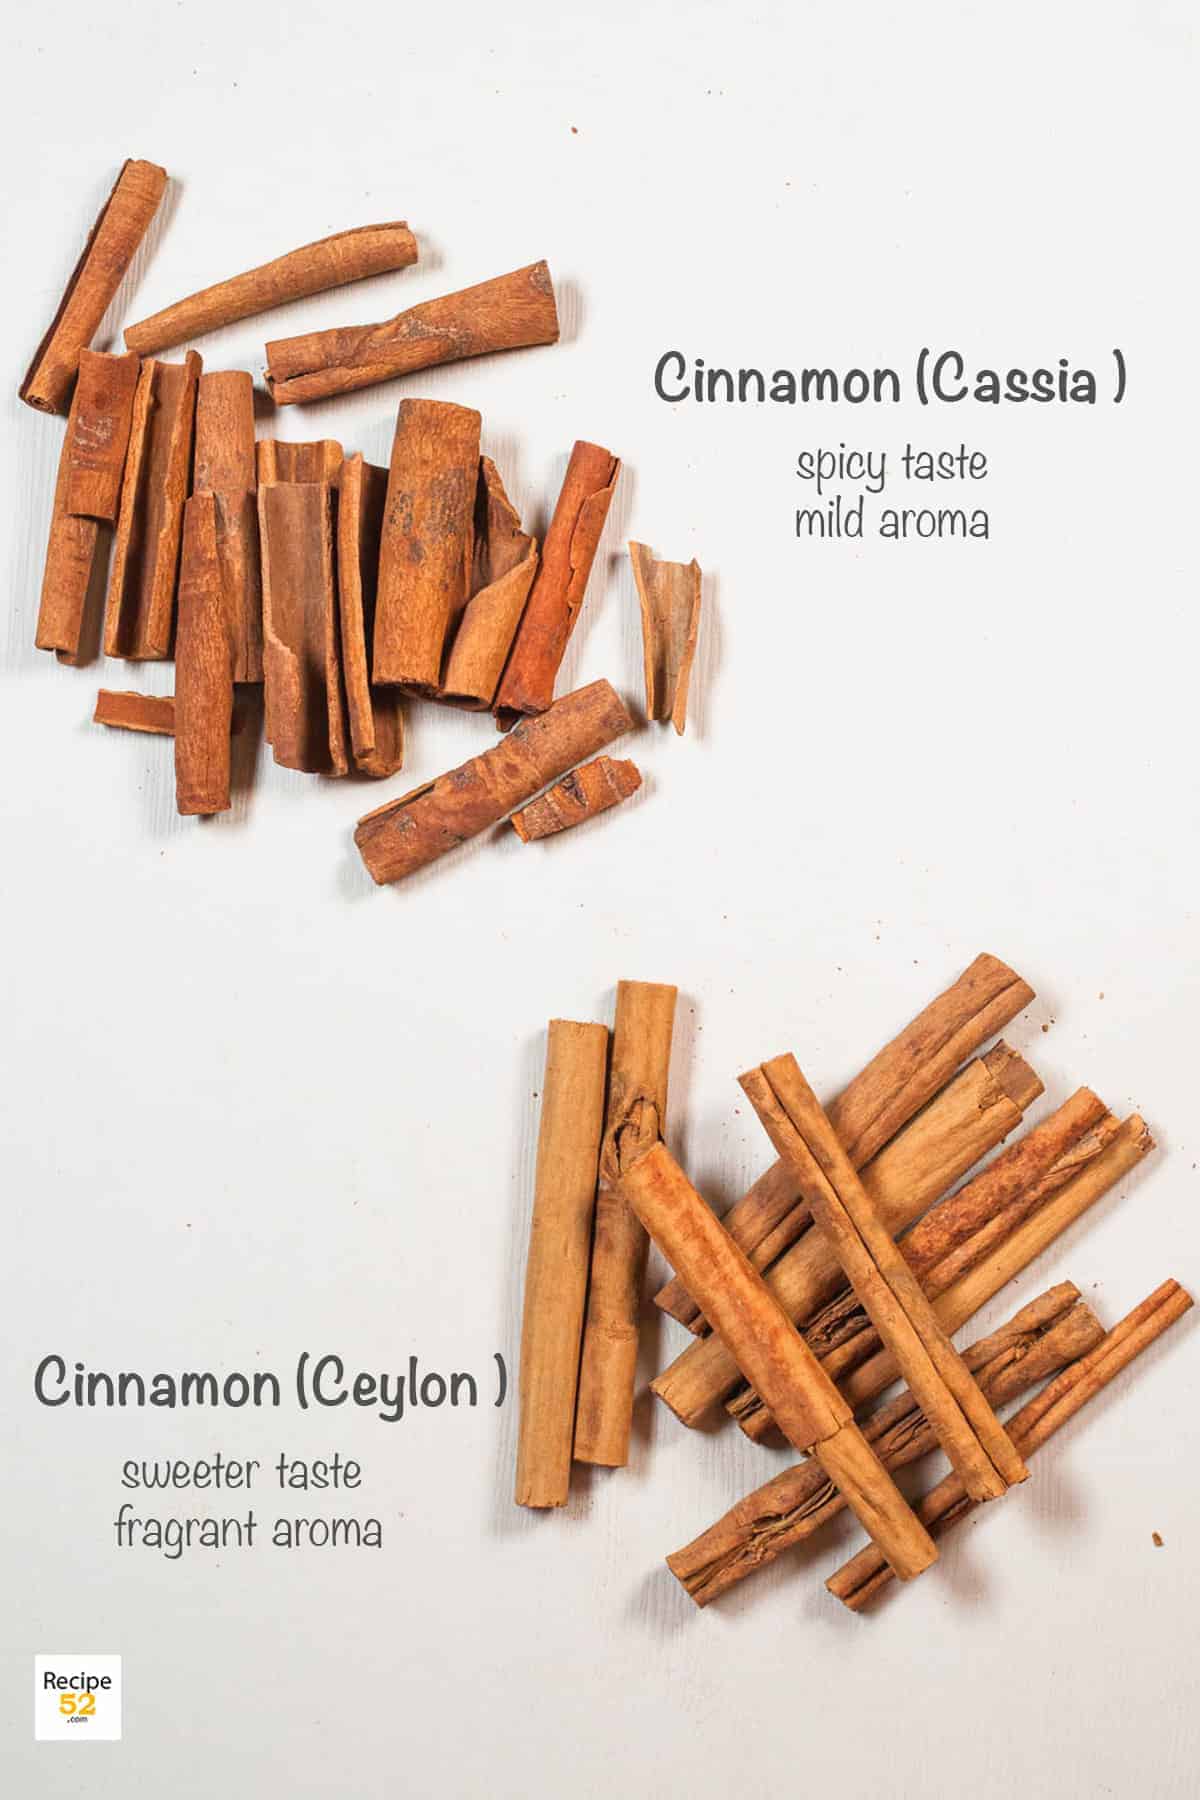 ceylon and cassia cinnamon bark kept on the white background.